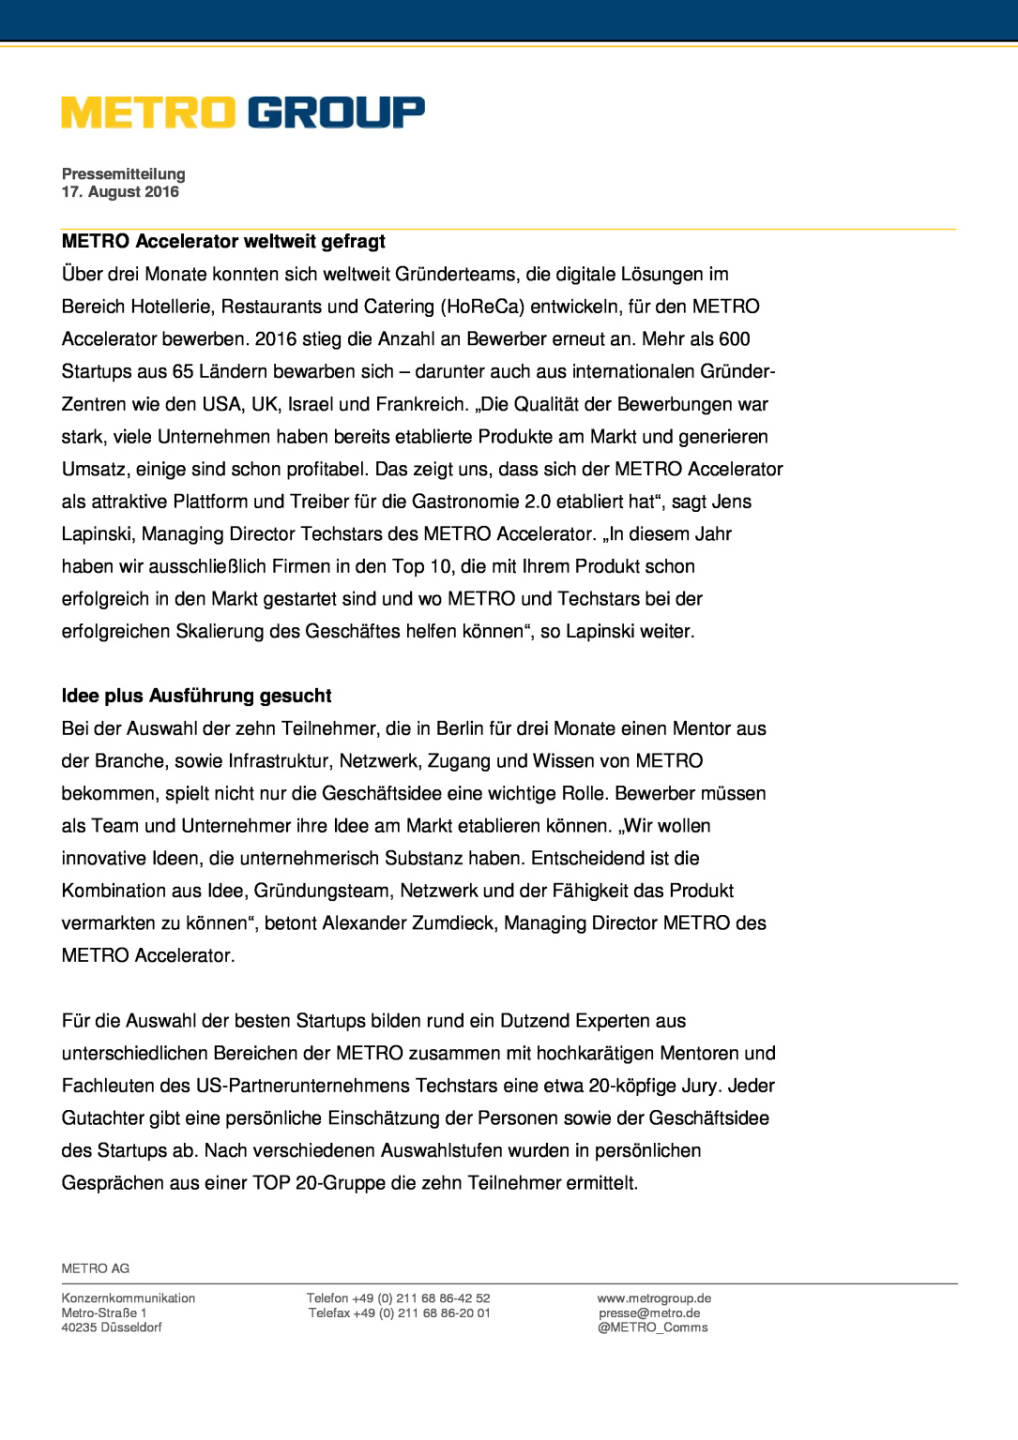 Metro Accelerator und Techstars: Gastronomie 2.0, Seite 2/3, komplettes Dokument unter http://boerse-social.com/static/uploads/file_1627_metro_accelerator_und_techstars_gastronomie_20.pdf